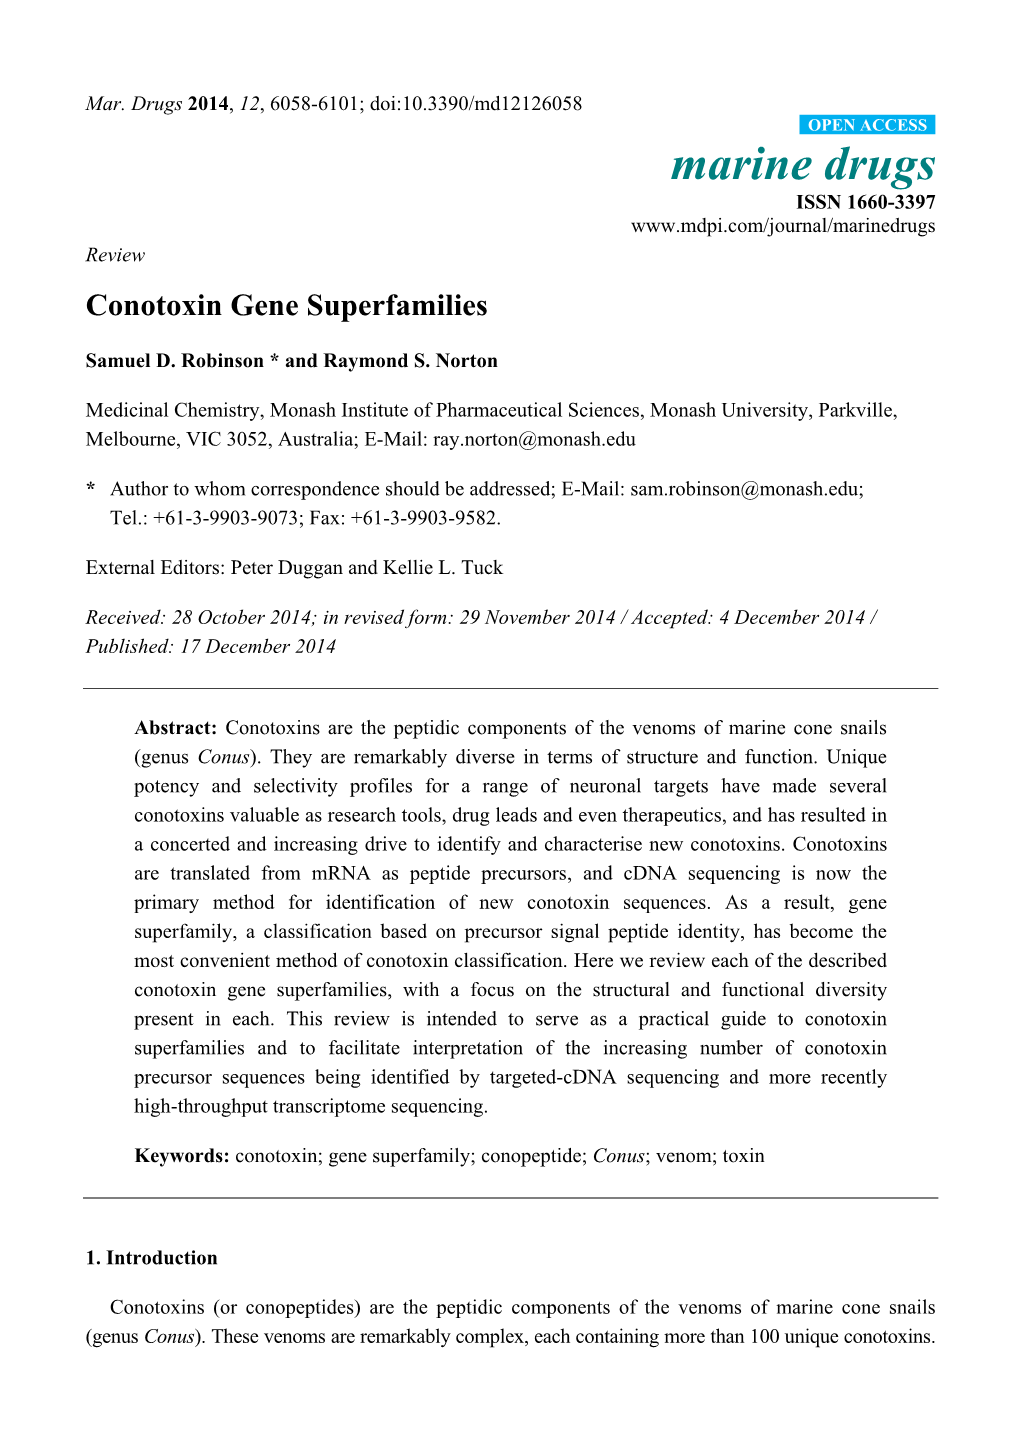 Conotoxin Gene Superfamilies